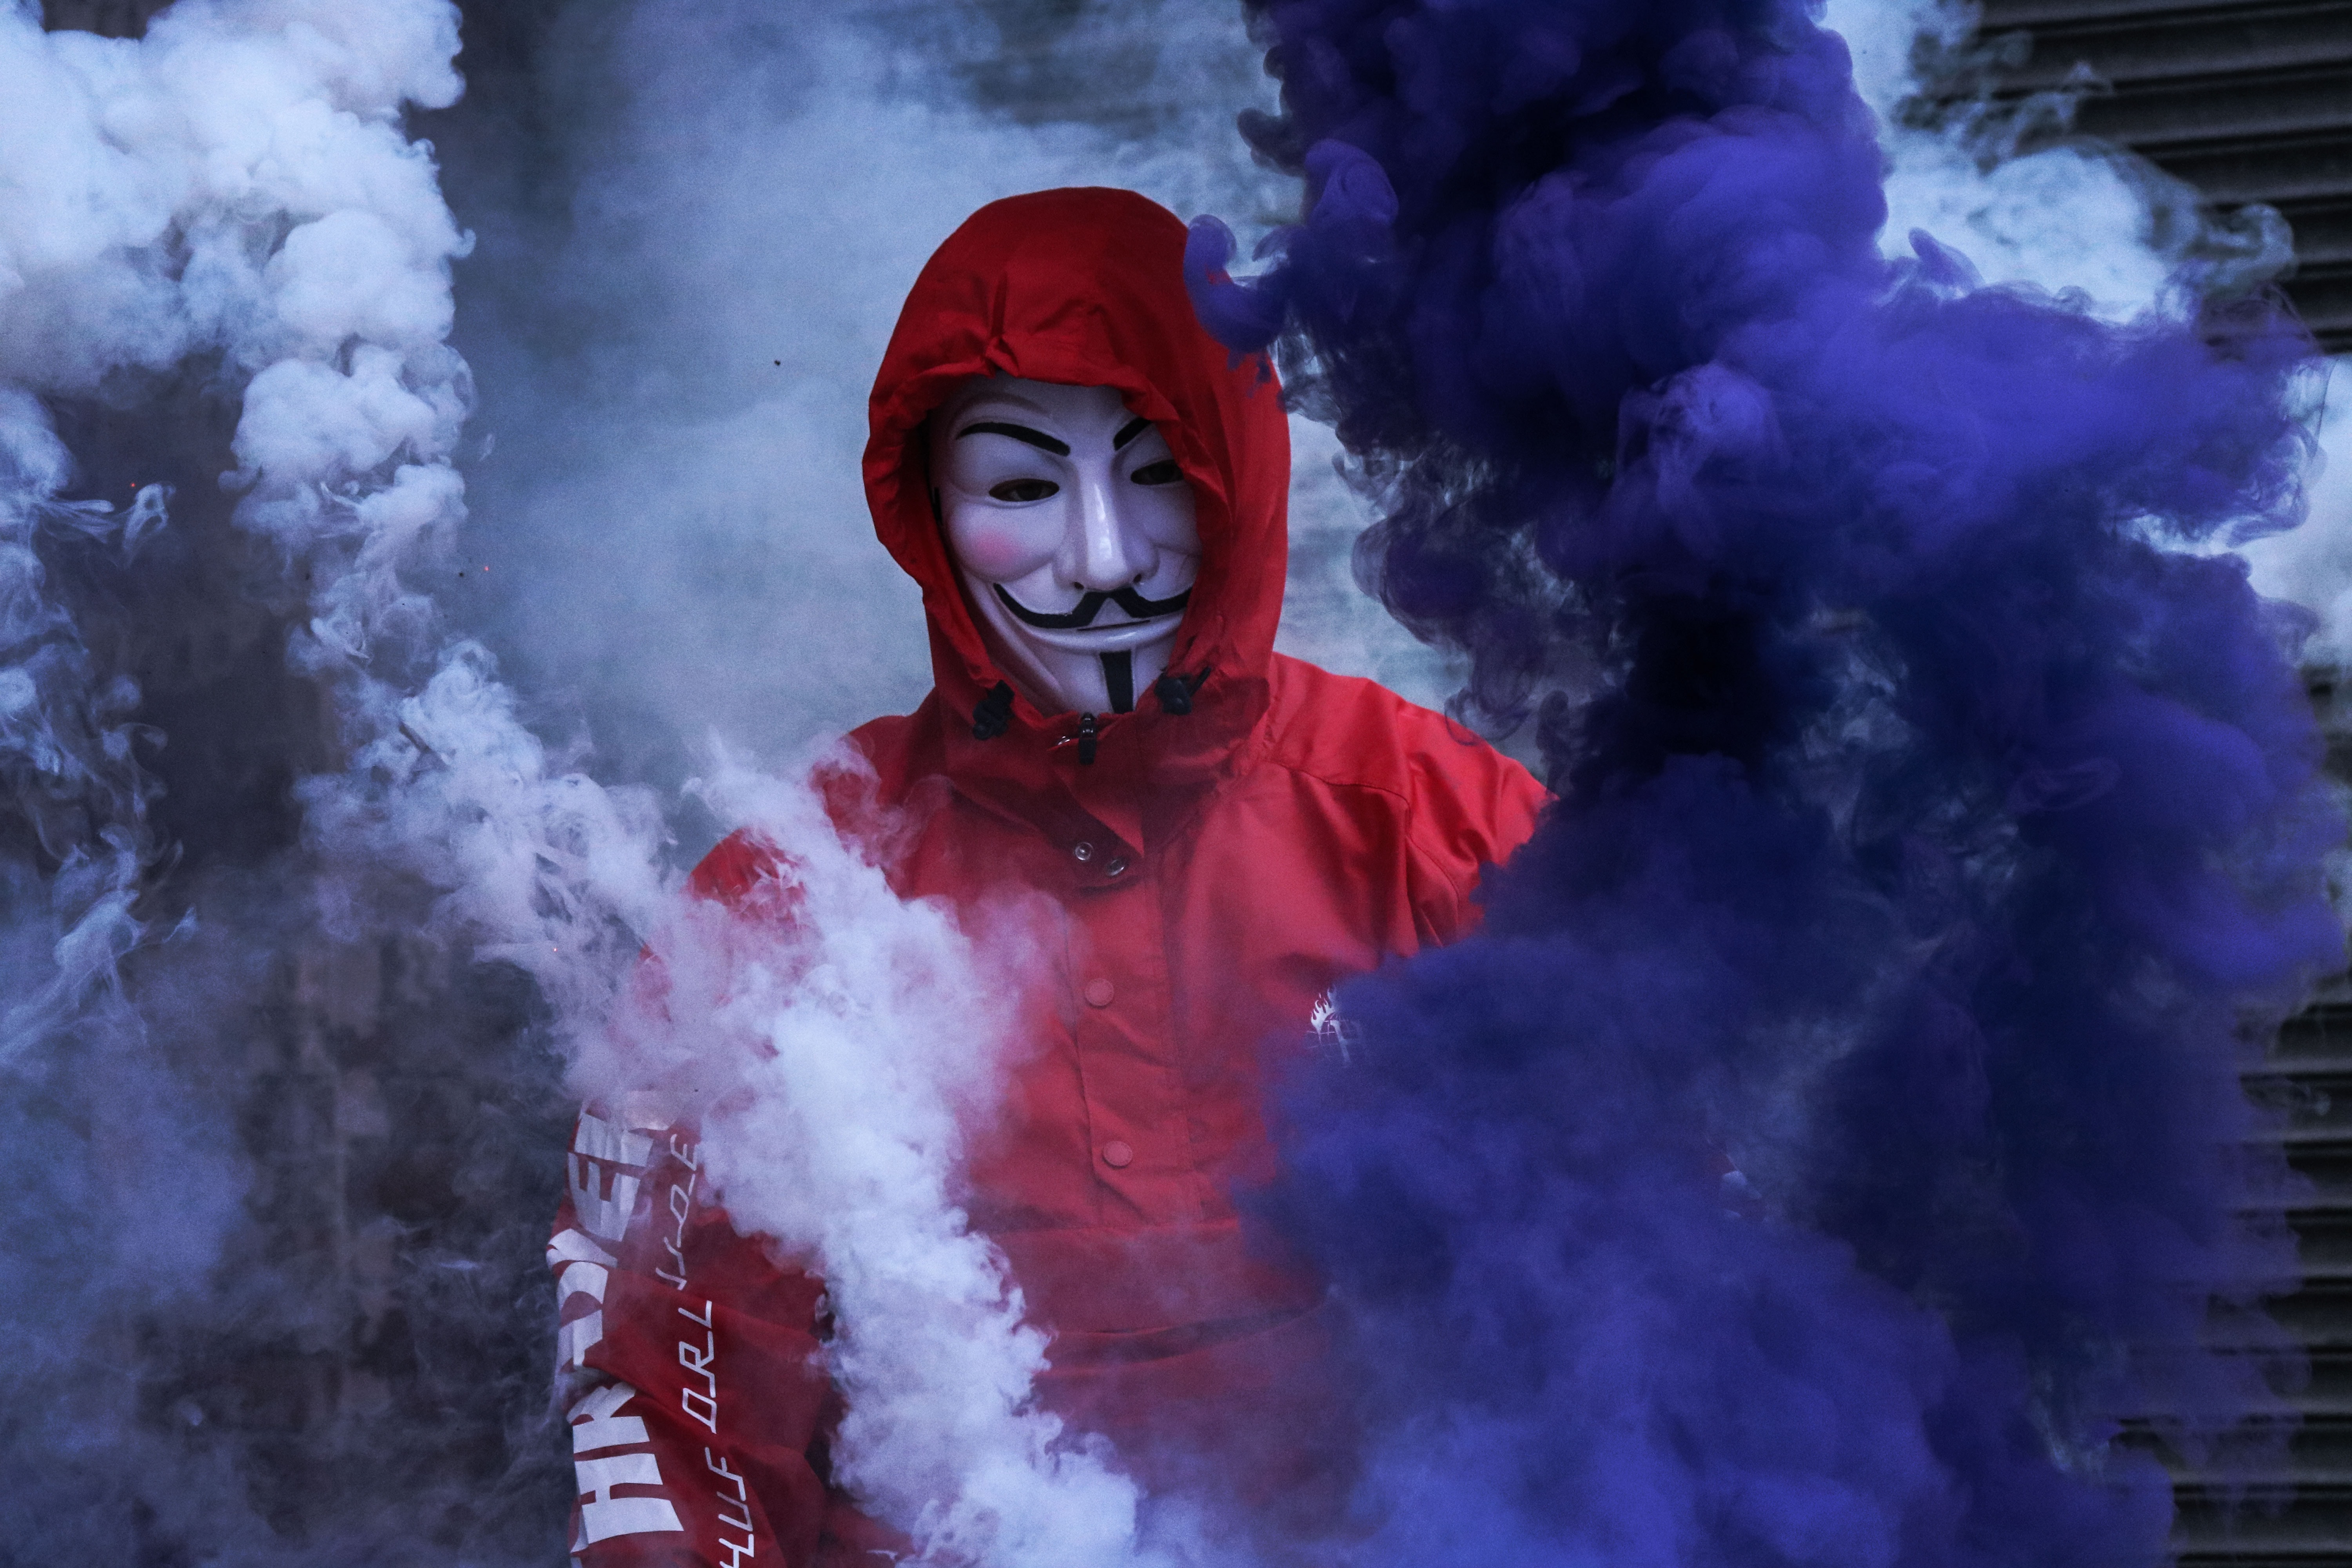 mask, anonymous, smoke, miscellanea, miscellaneous, smoke bomb wallpaper for mobile